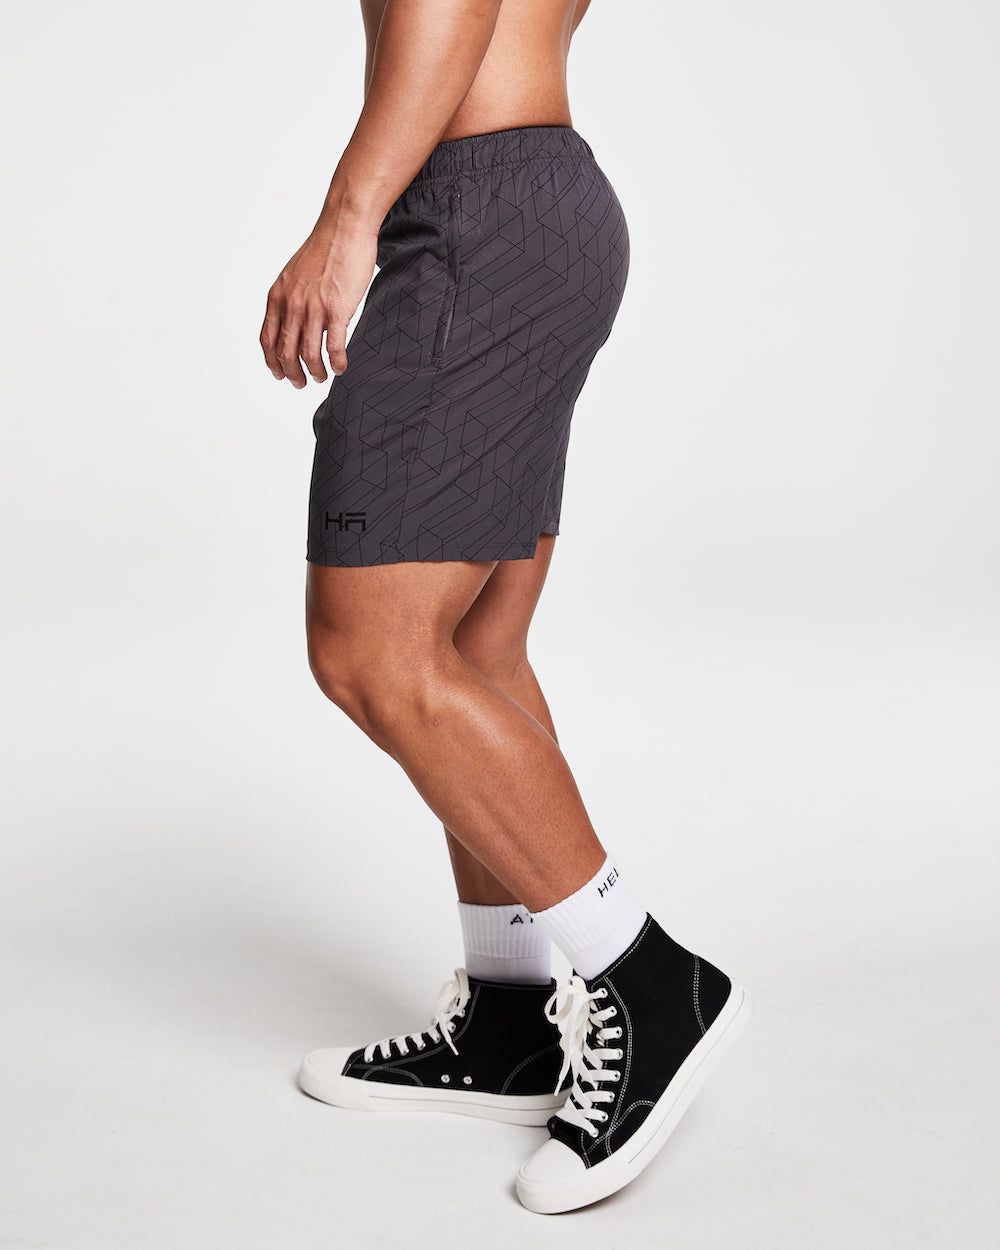 Aro 7" Gym Shorts - Hardline